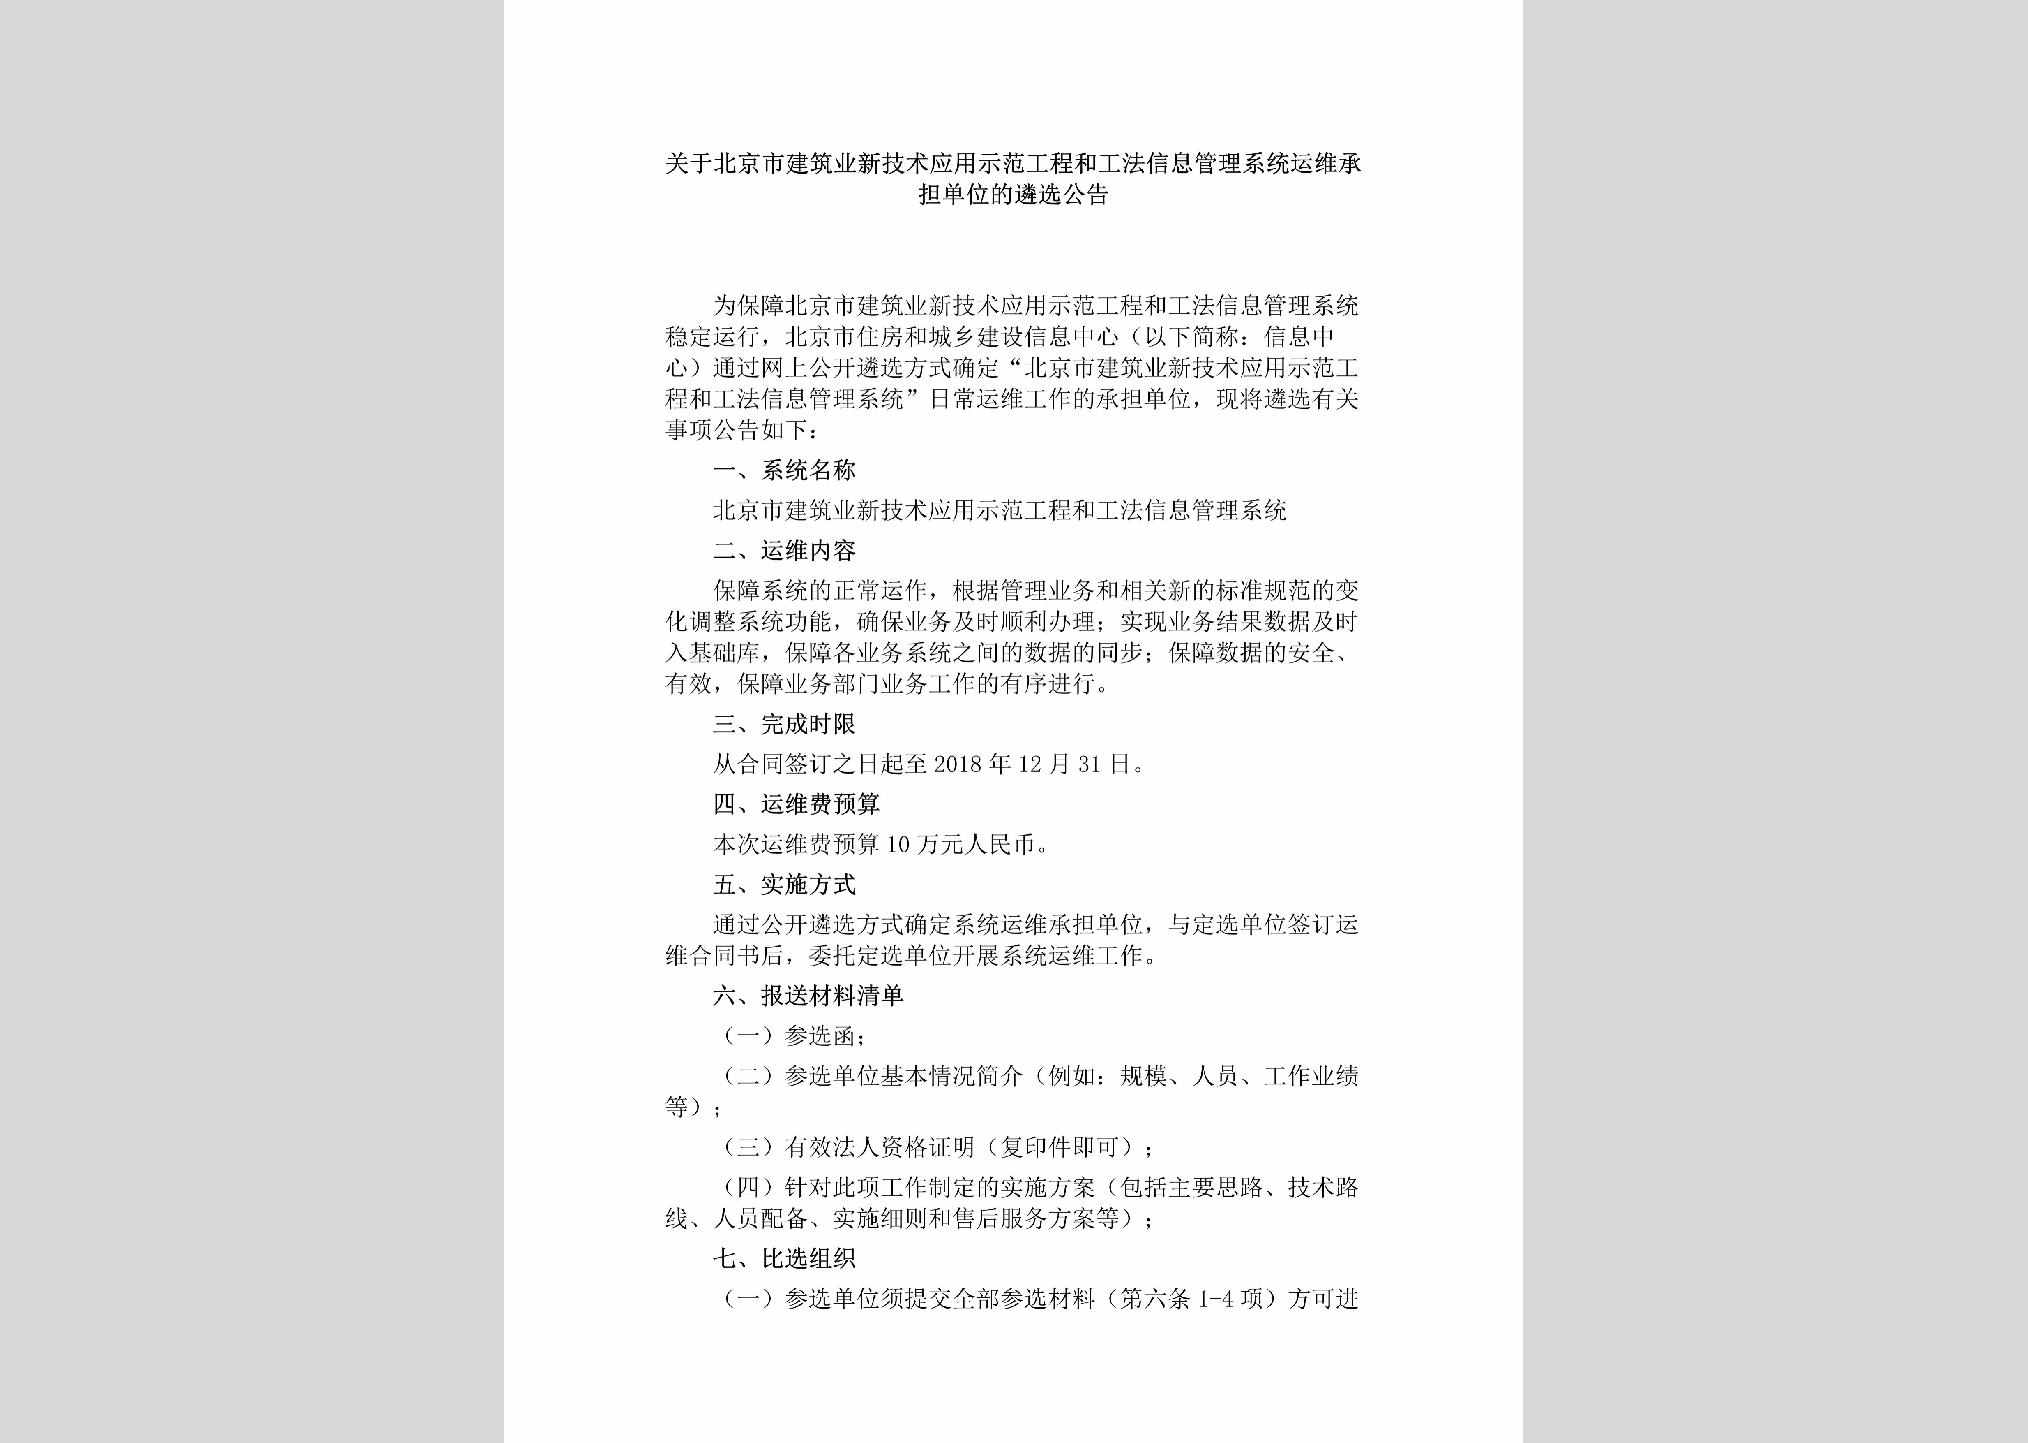 BJ-SFGCGFXX-2018：关于北京市建筑业新技术应用示范工程和工法信息管理系统运维承担单位的遴选公告